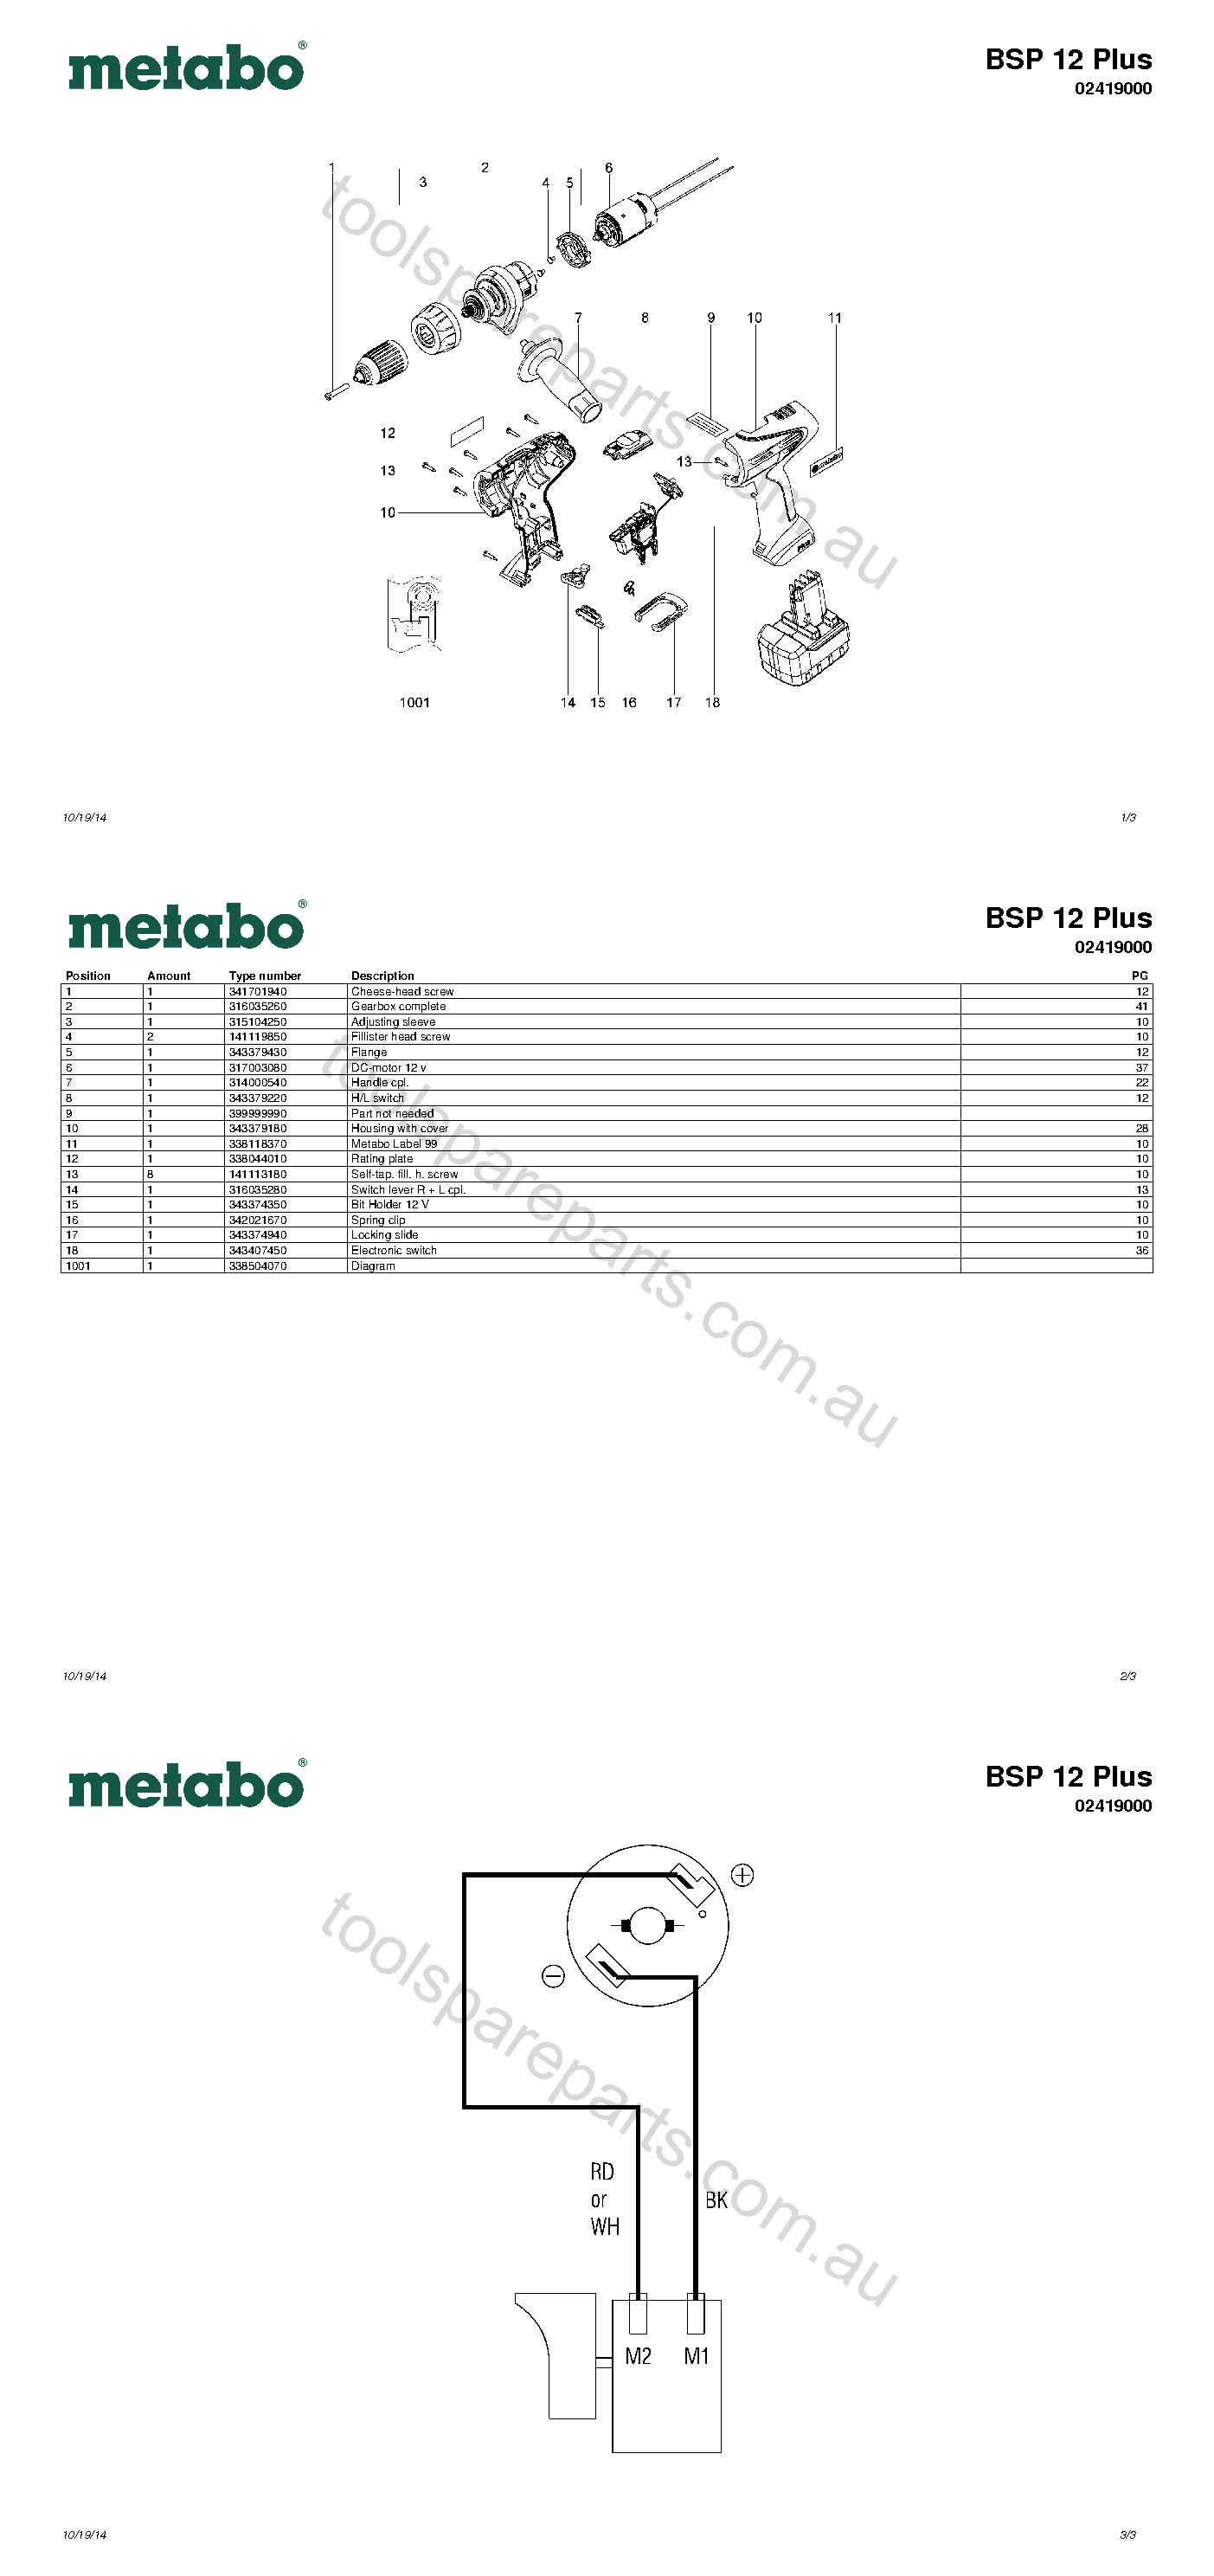 Metabo BSP 12 Plus 02419000  Diagram 1